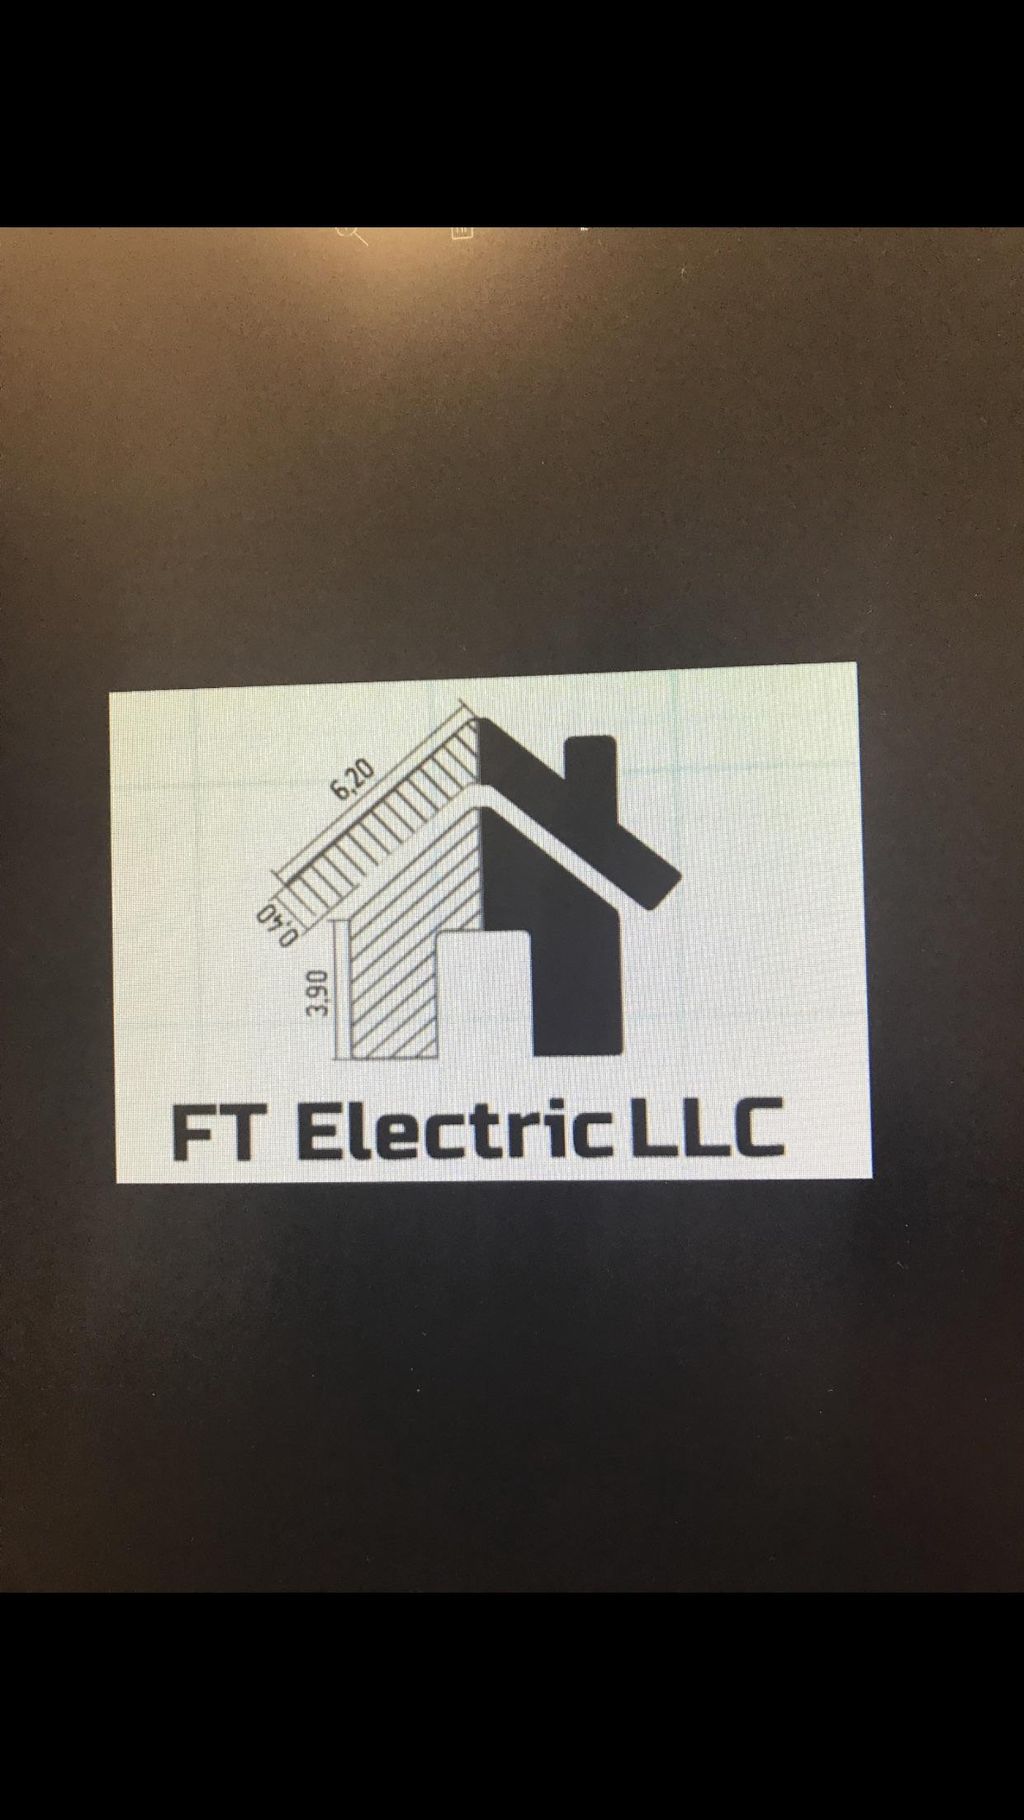 FT Electric LLC